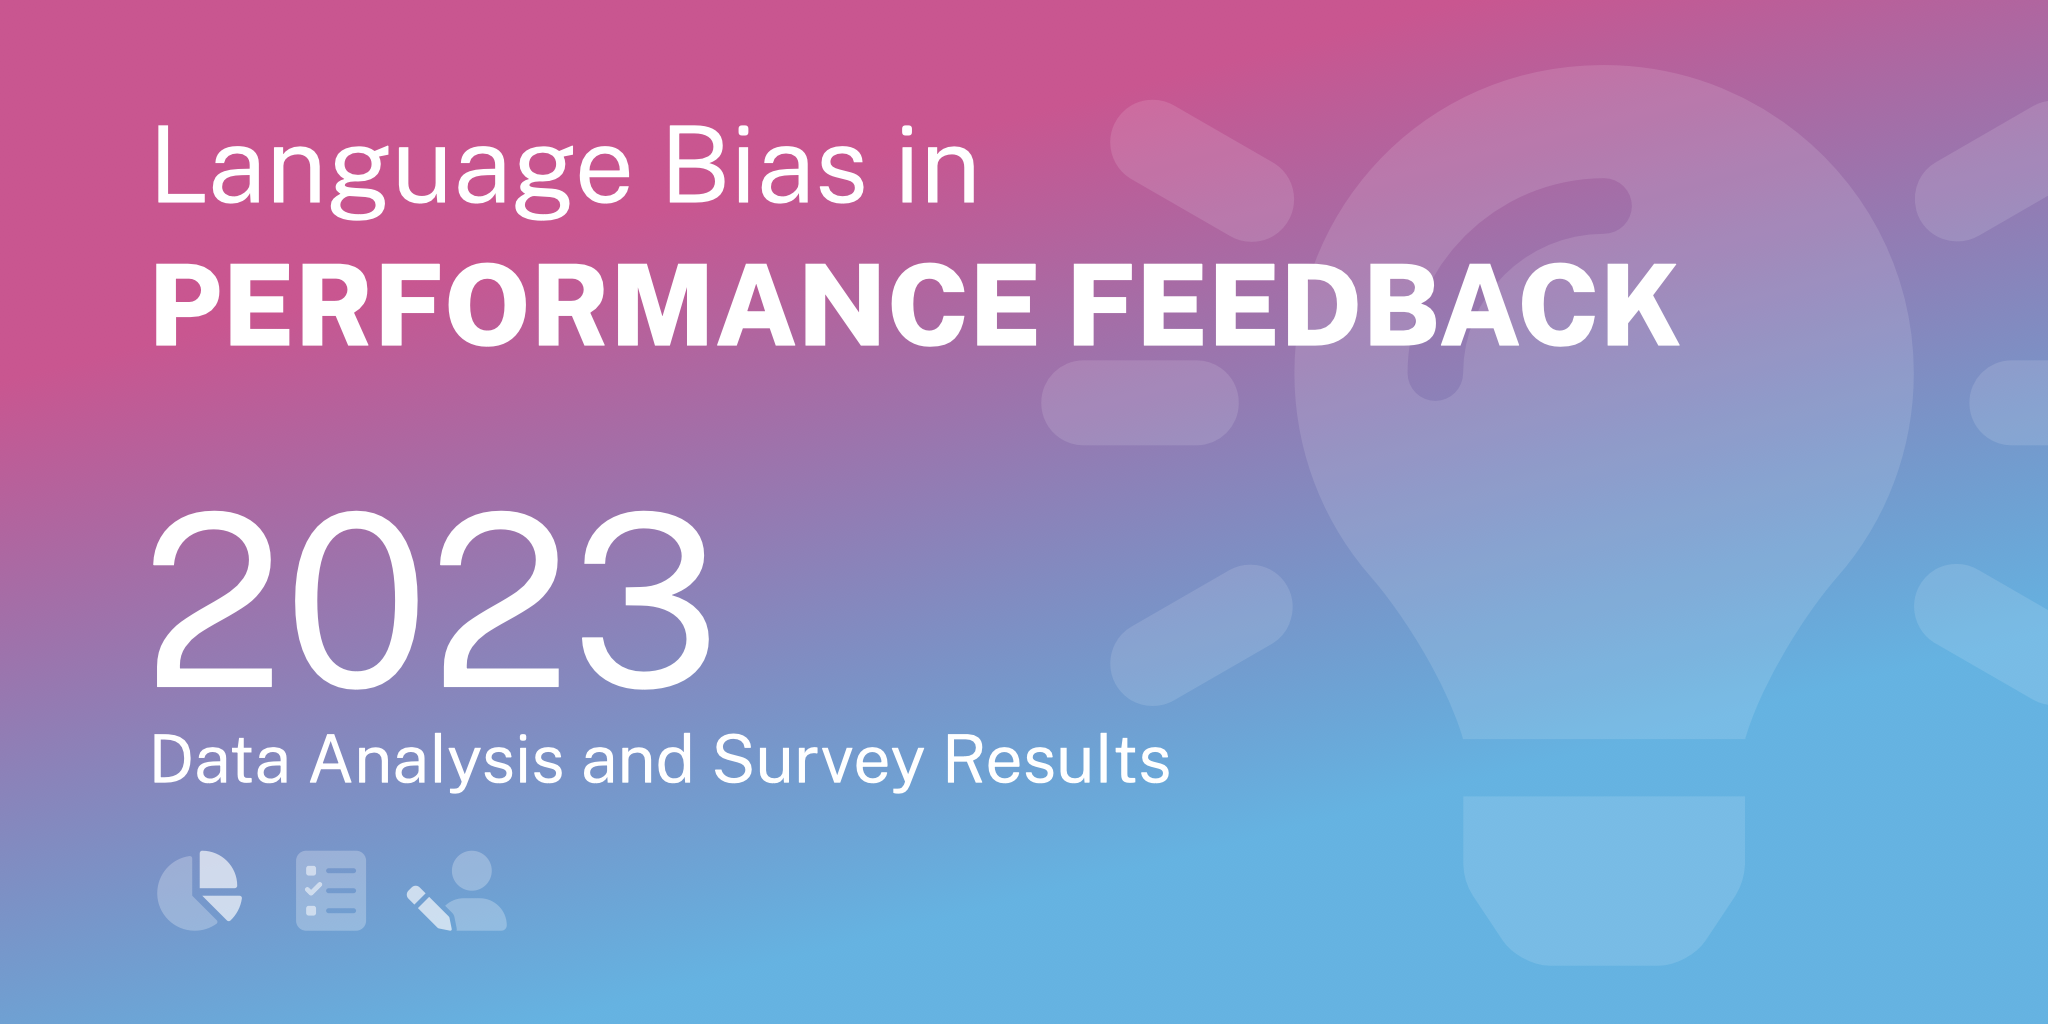 Textio's 2023 Language bias in Performance Feedback report